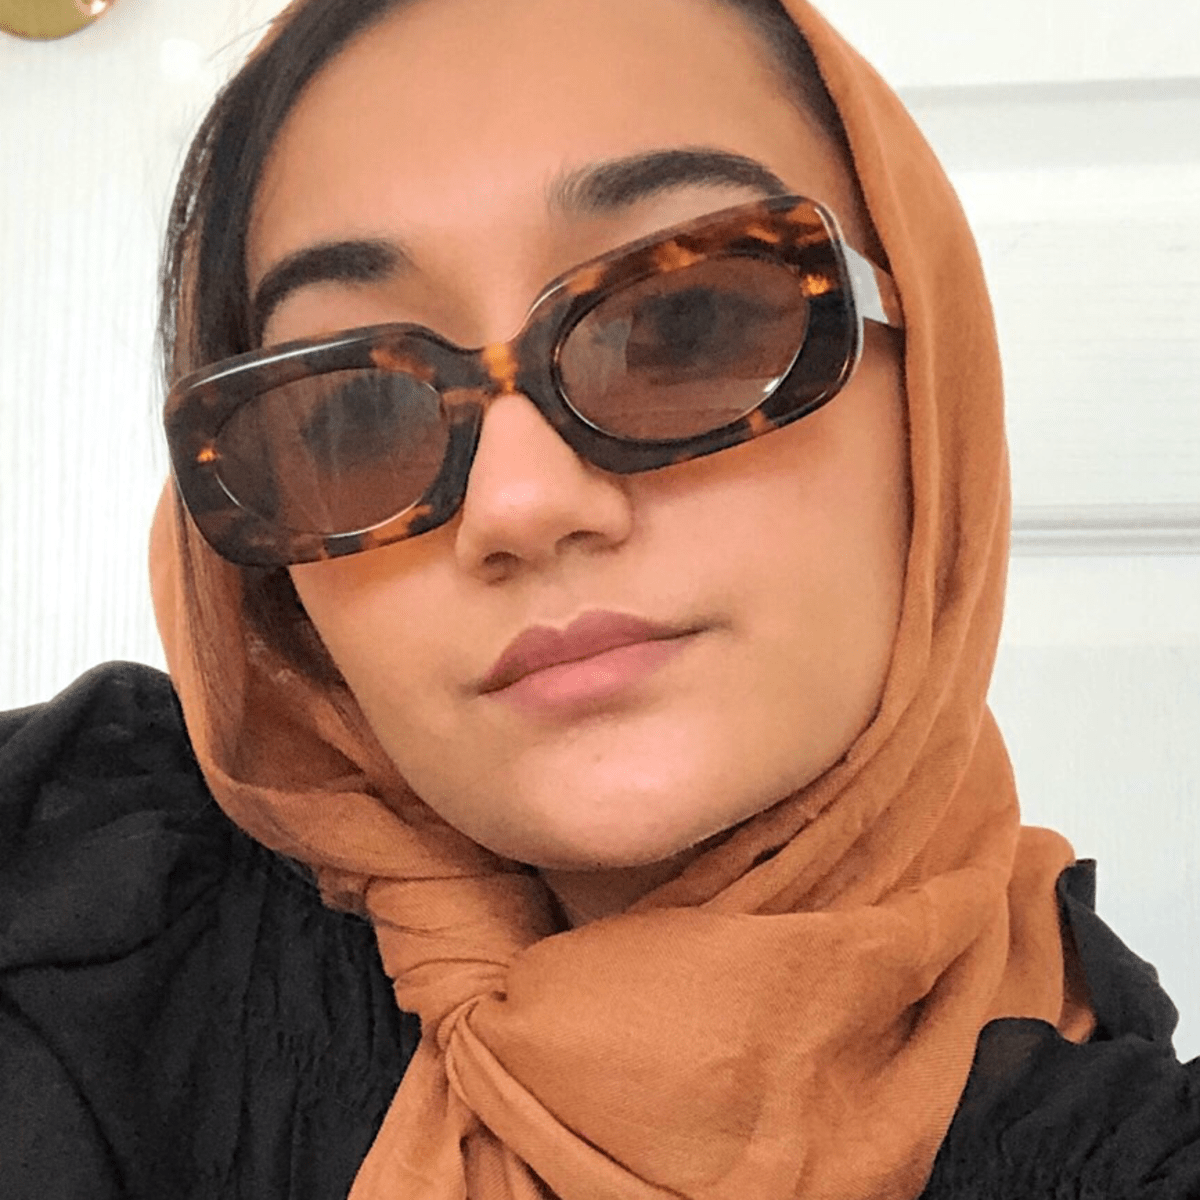 Iranian Social Media Explodes Over Young Hijab Victim